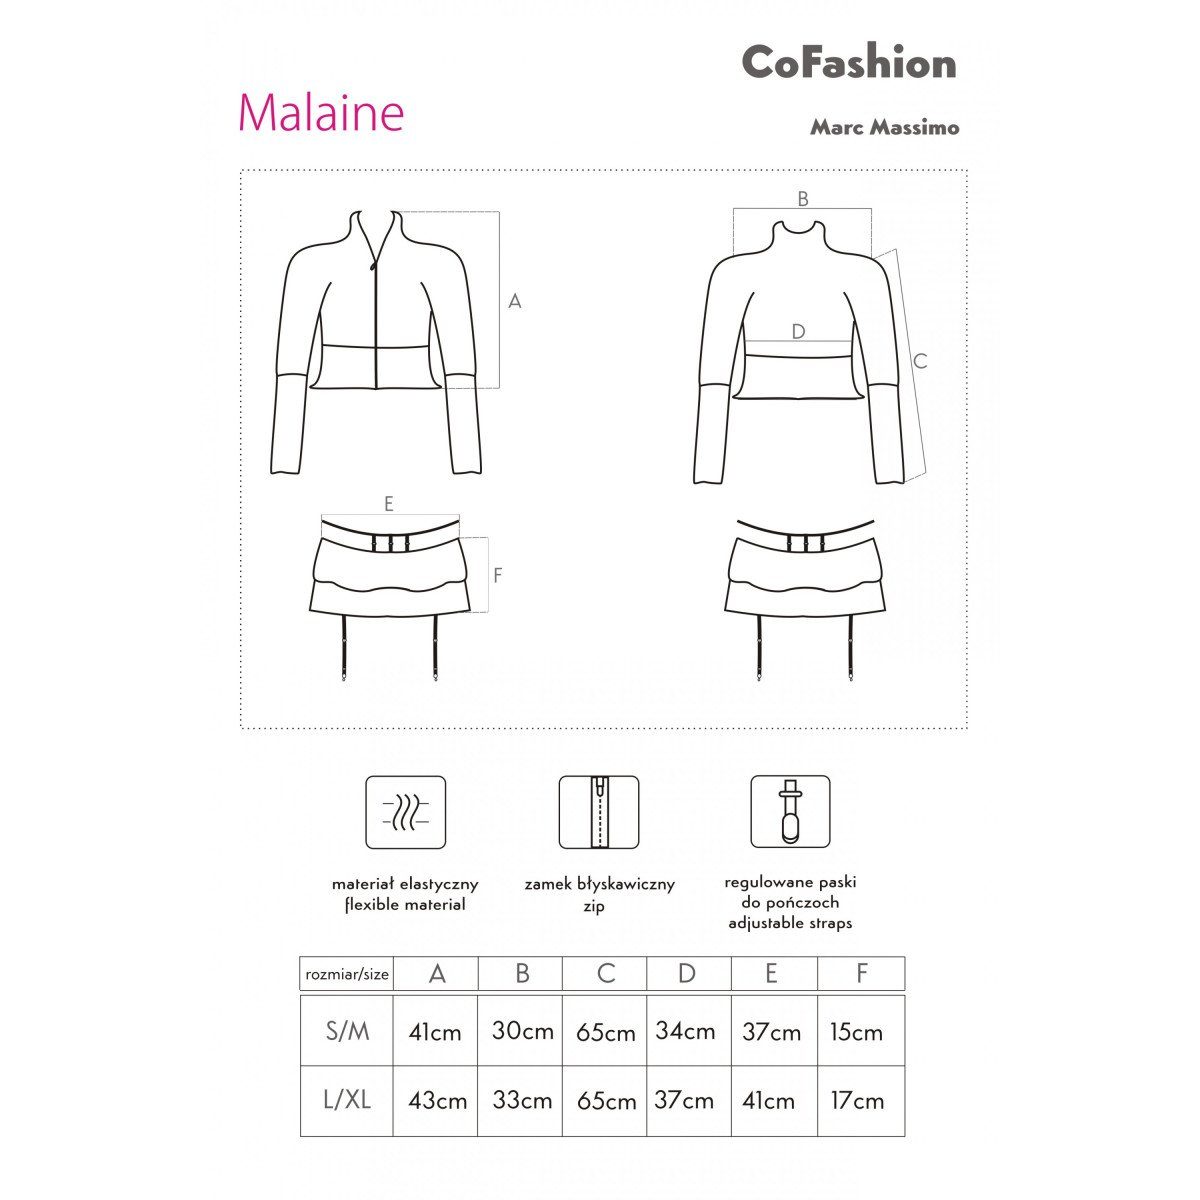 Malaine CoFashion Set: CF Set (L/XL,S/M) - Lingerie schwarz Schalen-BH